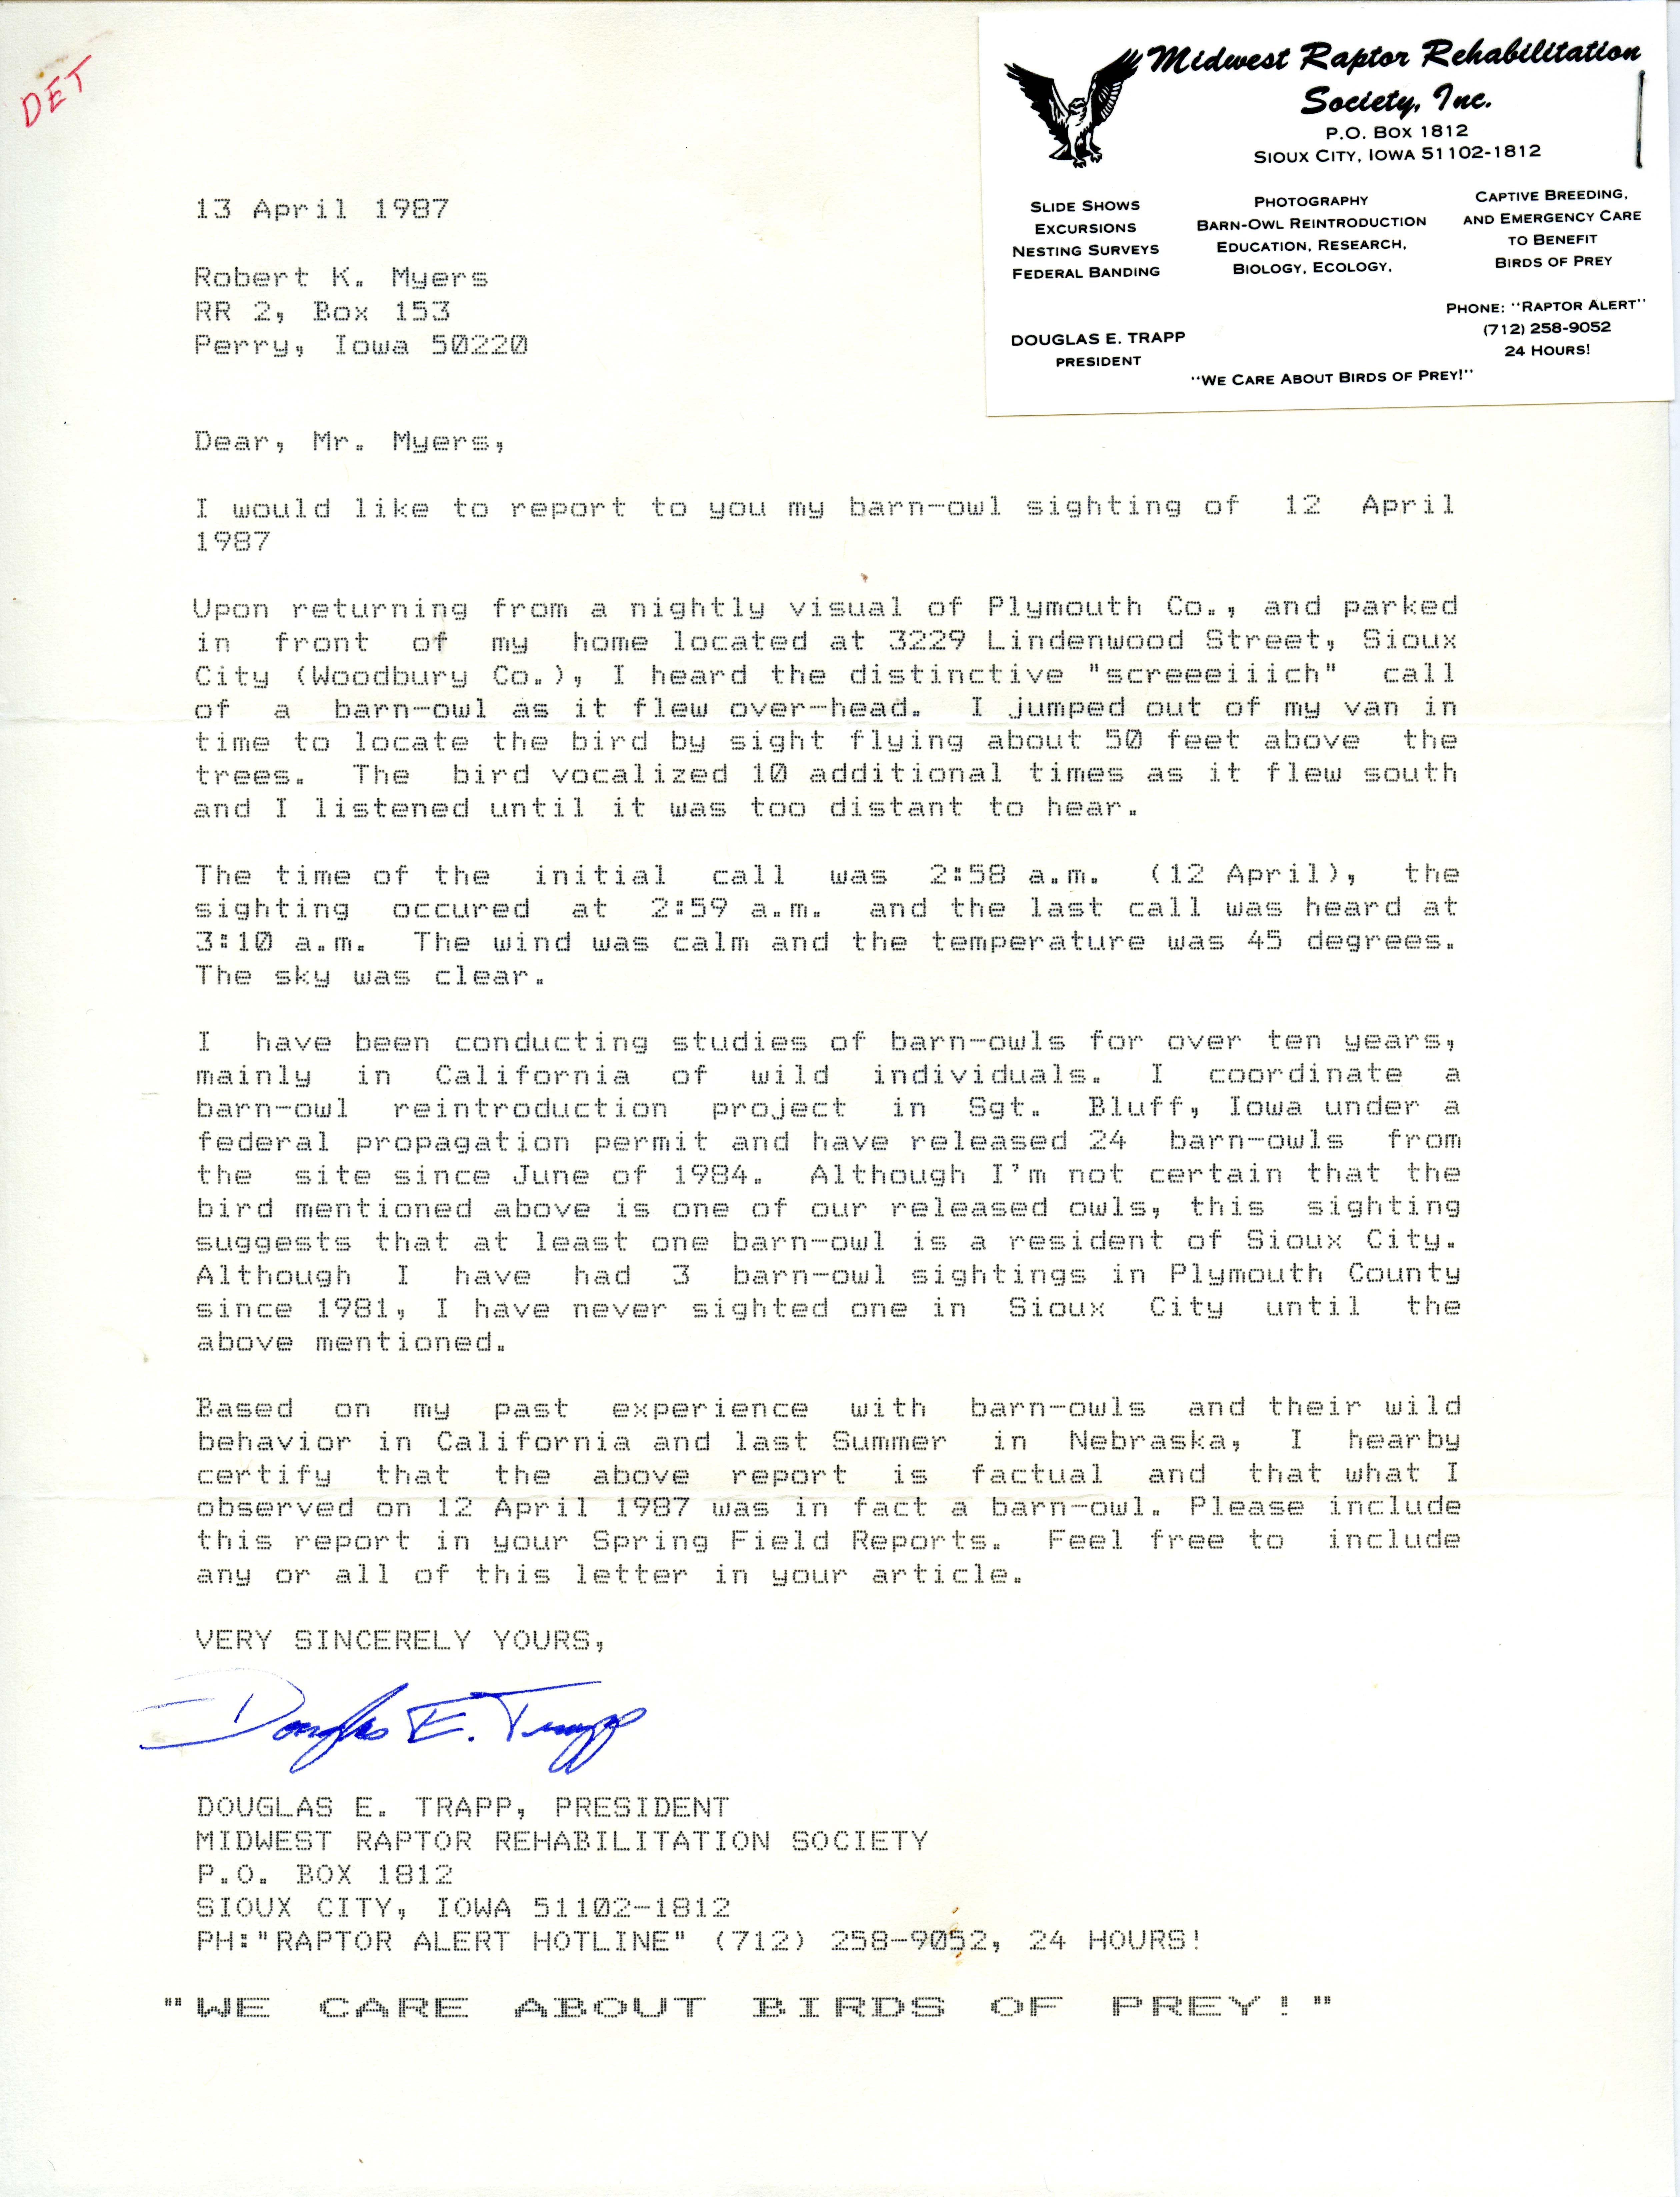 Douglas E. Trapp letter to Robert K. Myers regarding a bird sighting, April 13, 1987